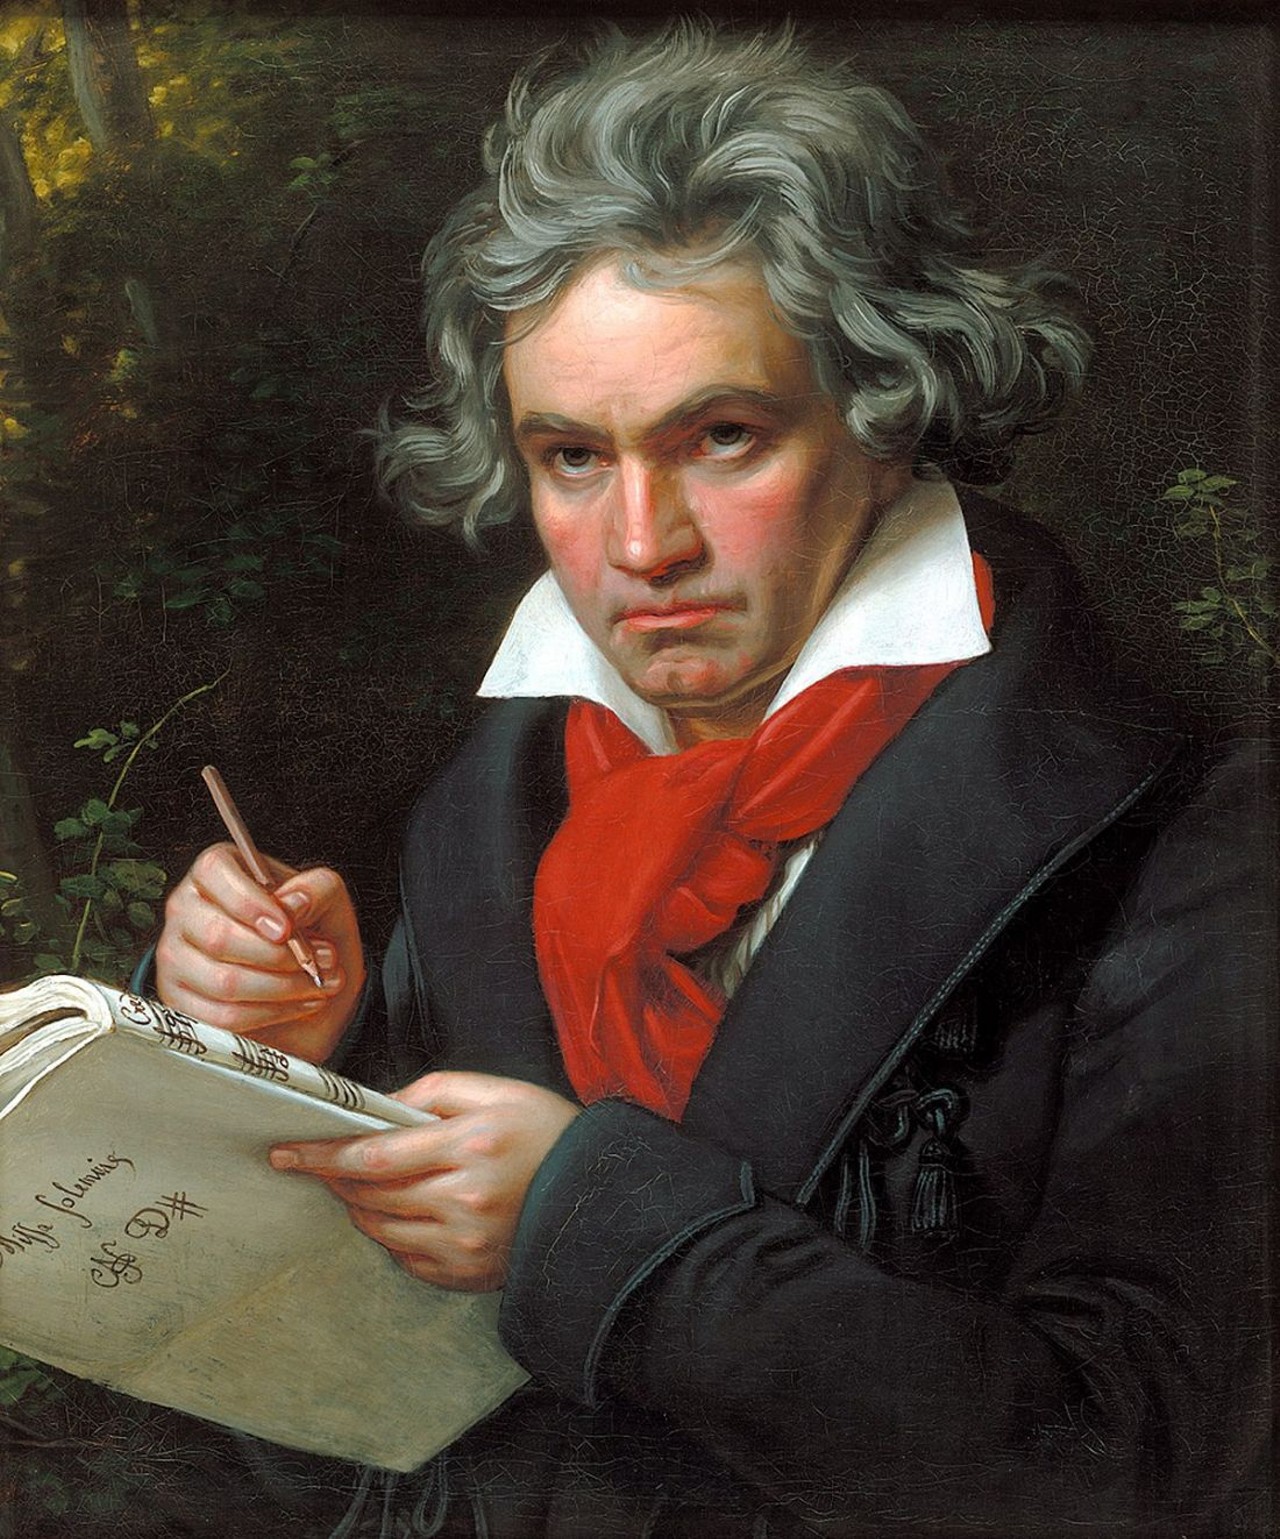  Bronfman Plays Beethoven's Emperor Concerto
Thu, March 1-Sun, March 4
Artwork via Wikipedia